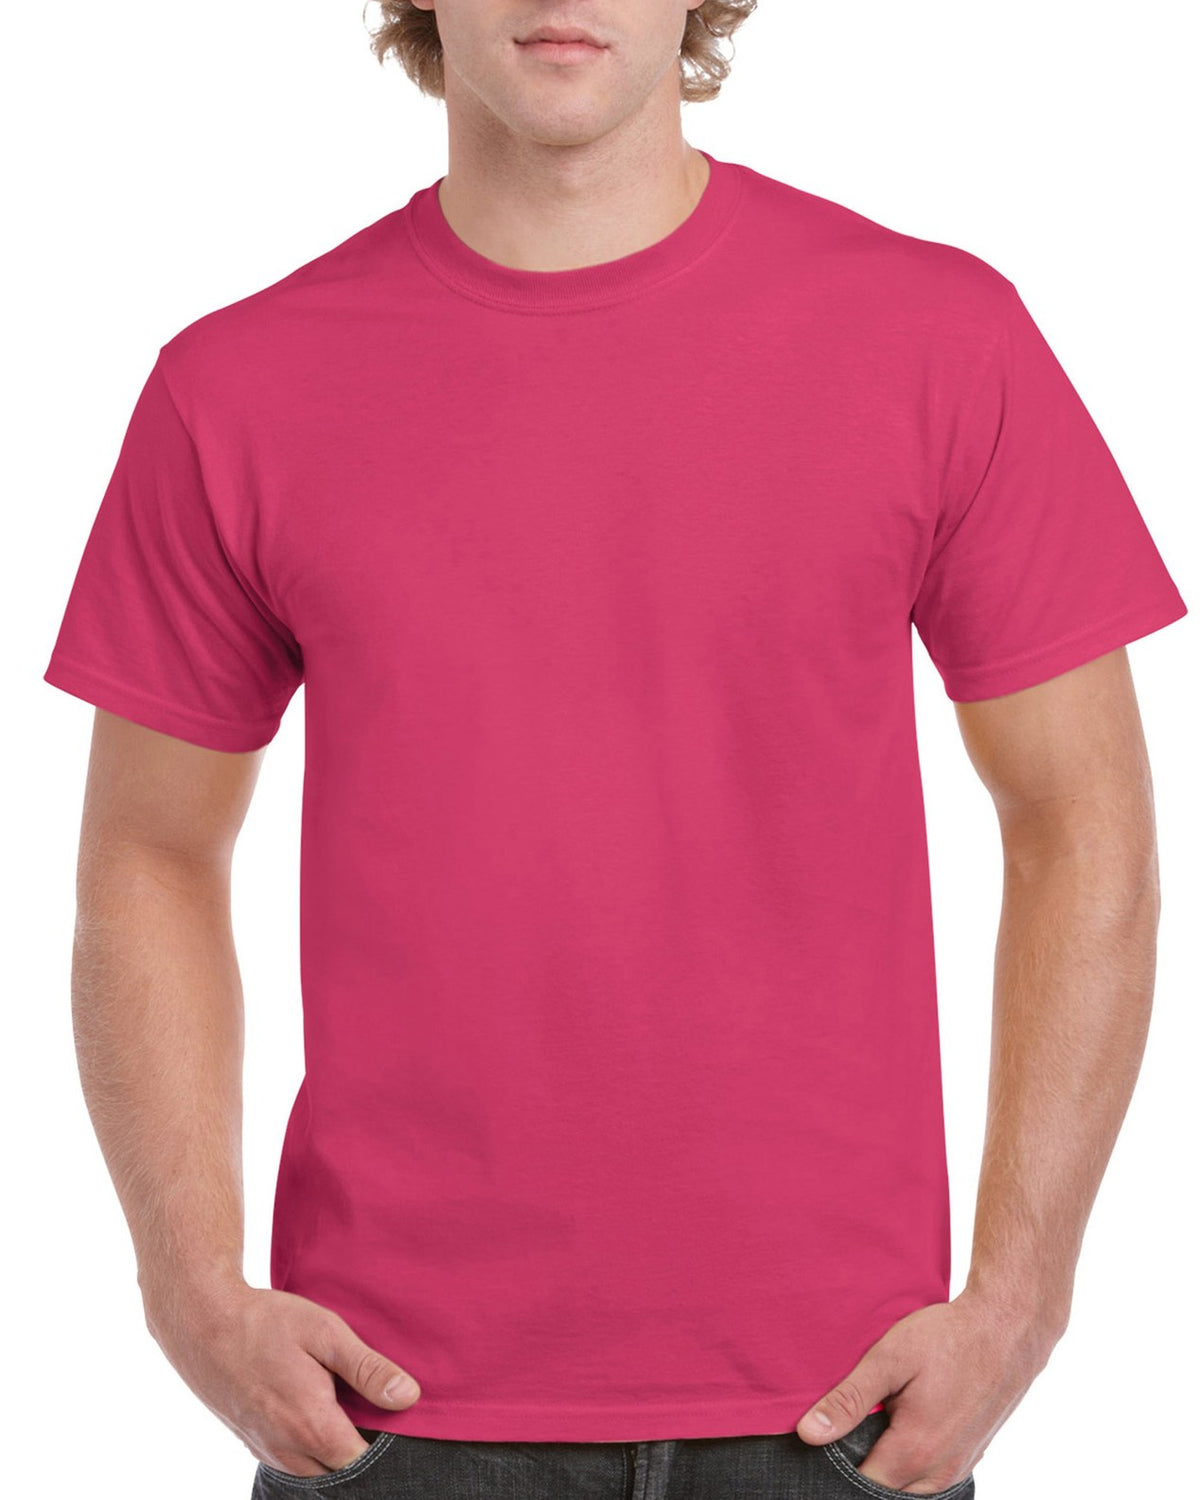 Heavy Duty Long Sleeve T-Shirts, Premium Cotton Shirts